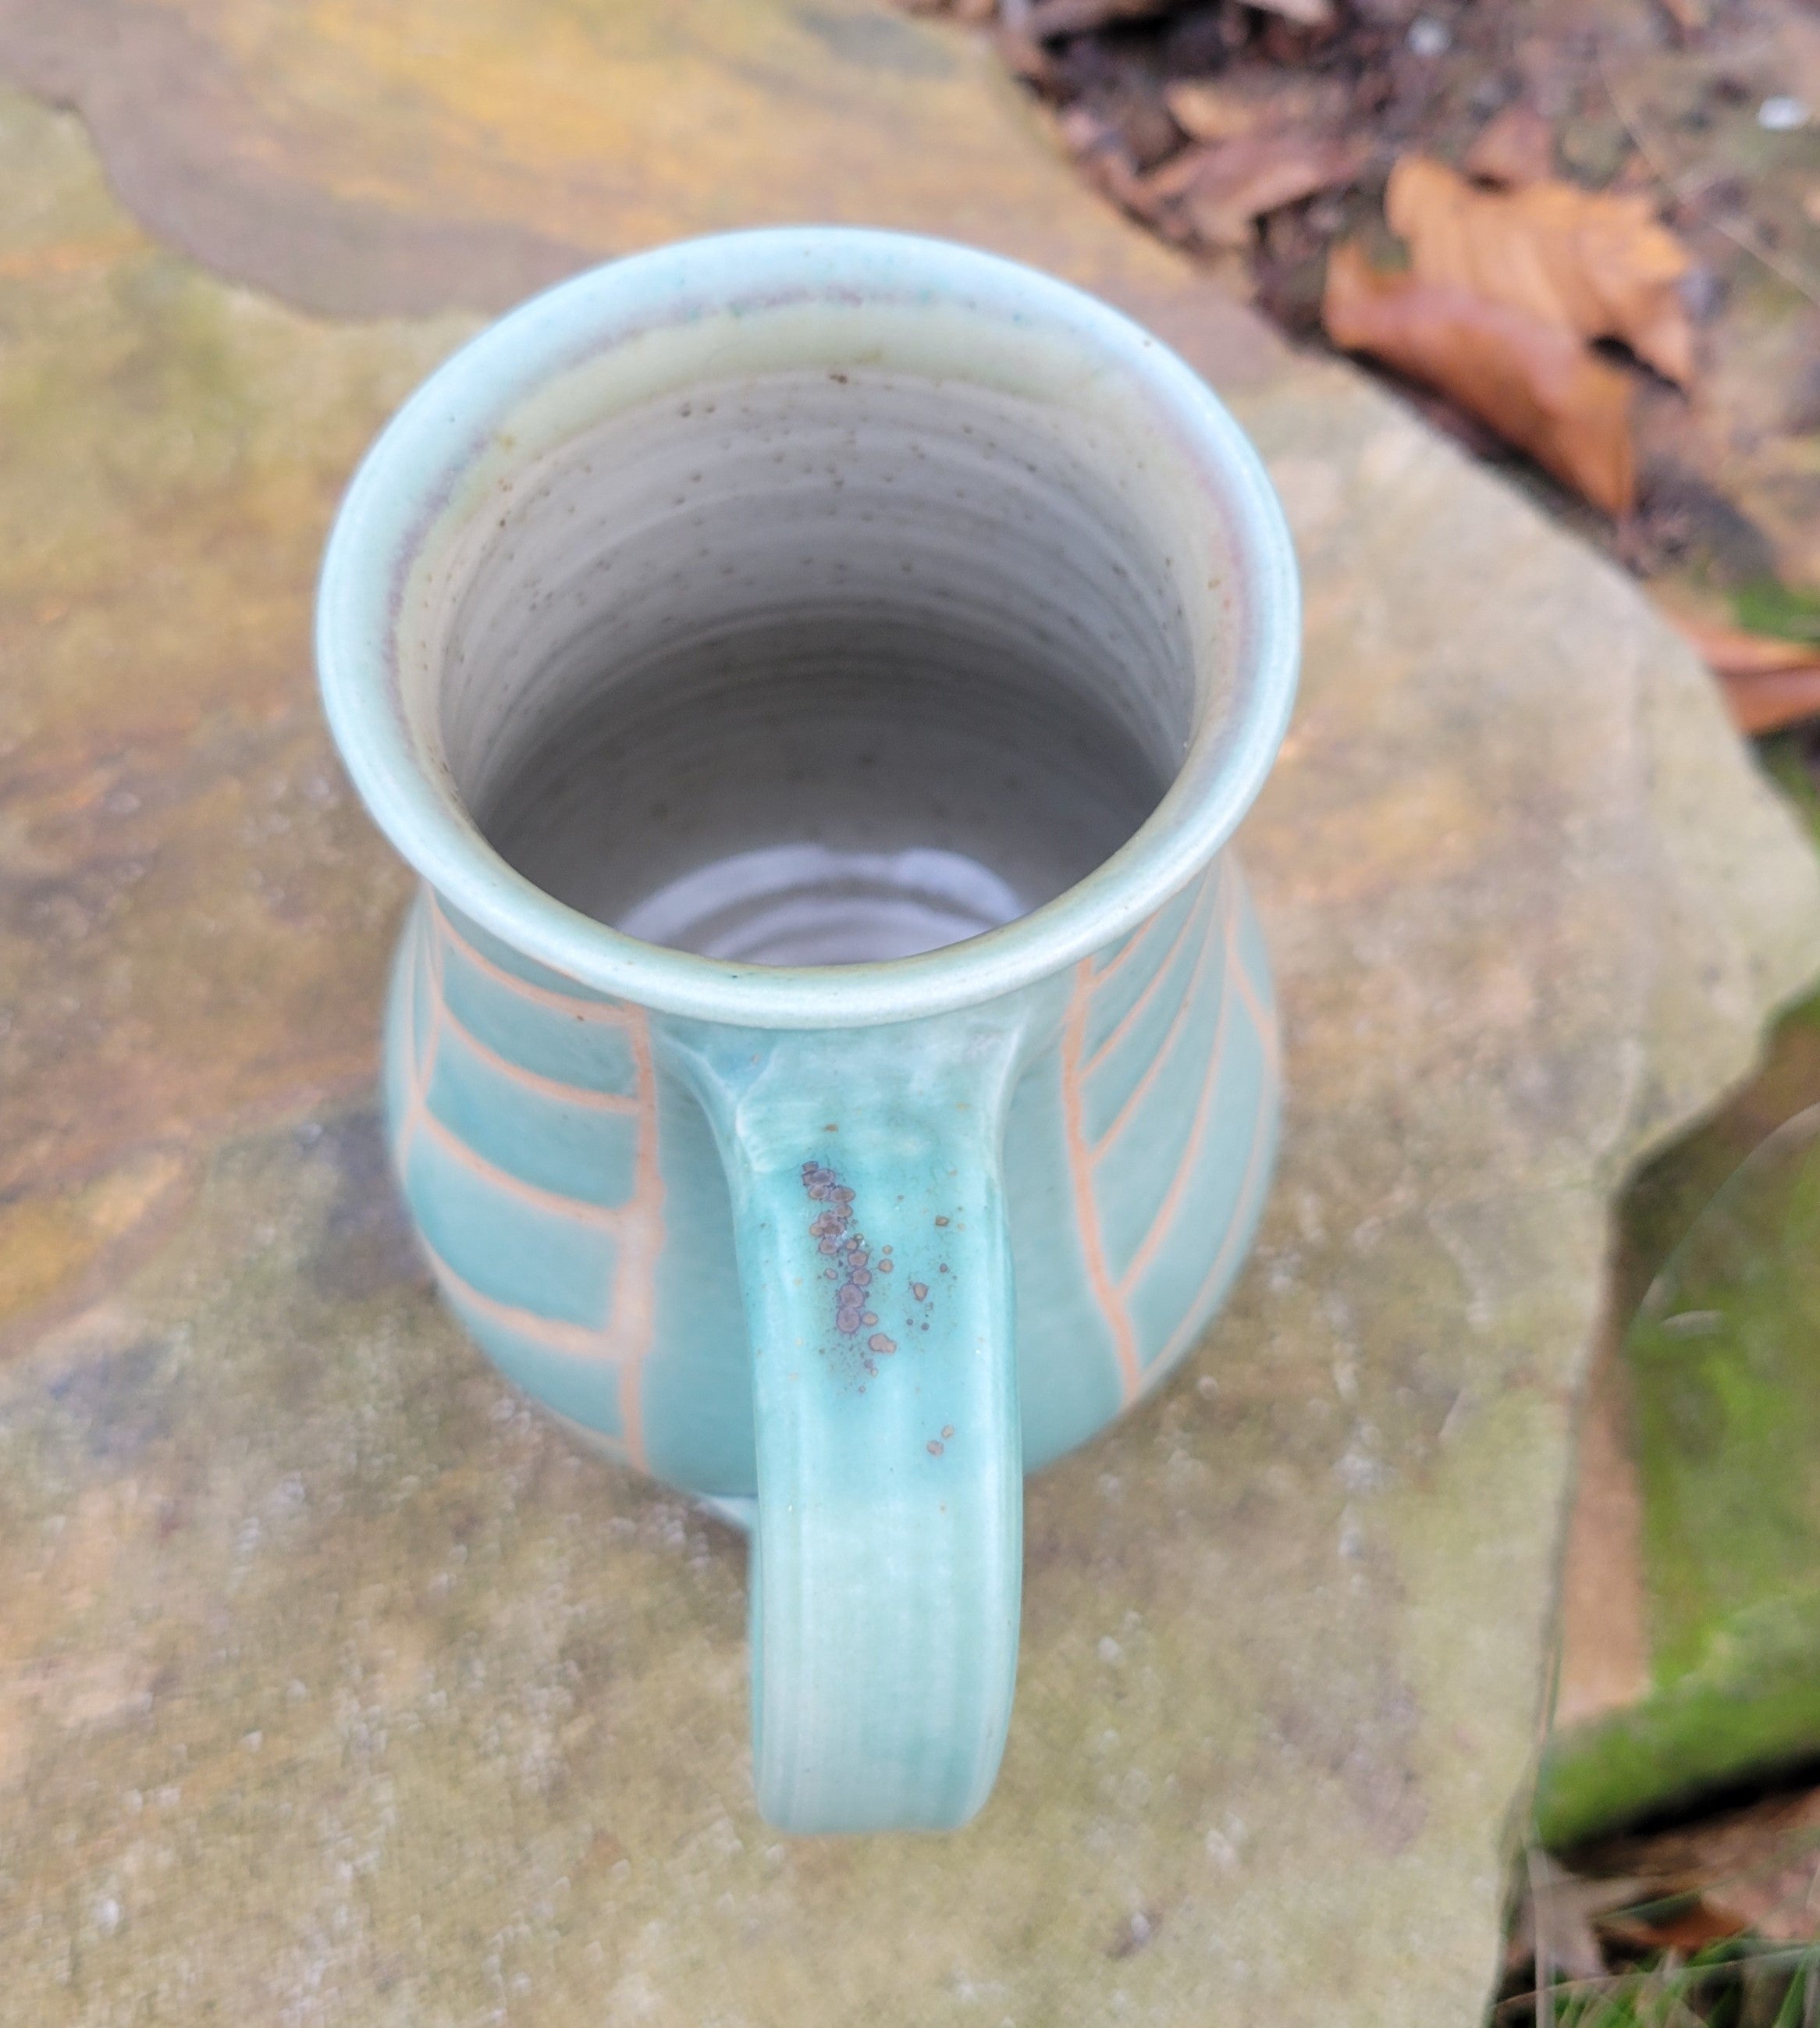 Coffee Mug in Light Turquoise Chevron Pattern